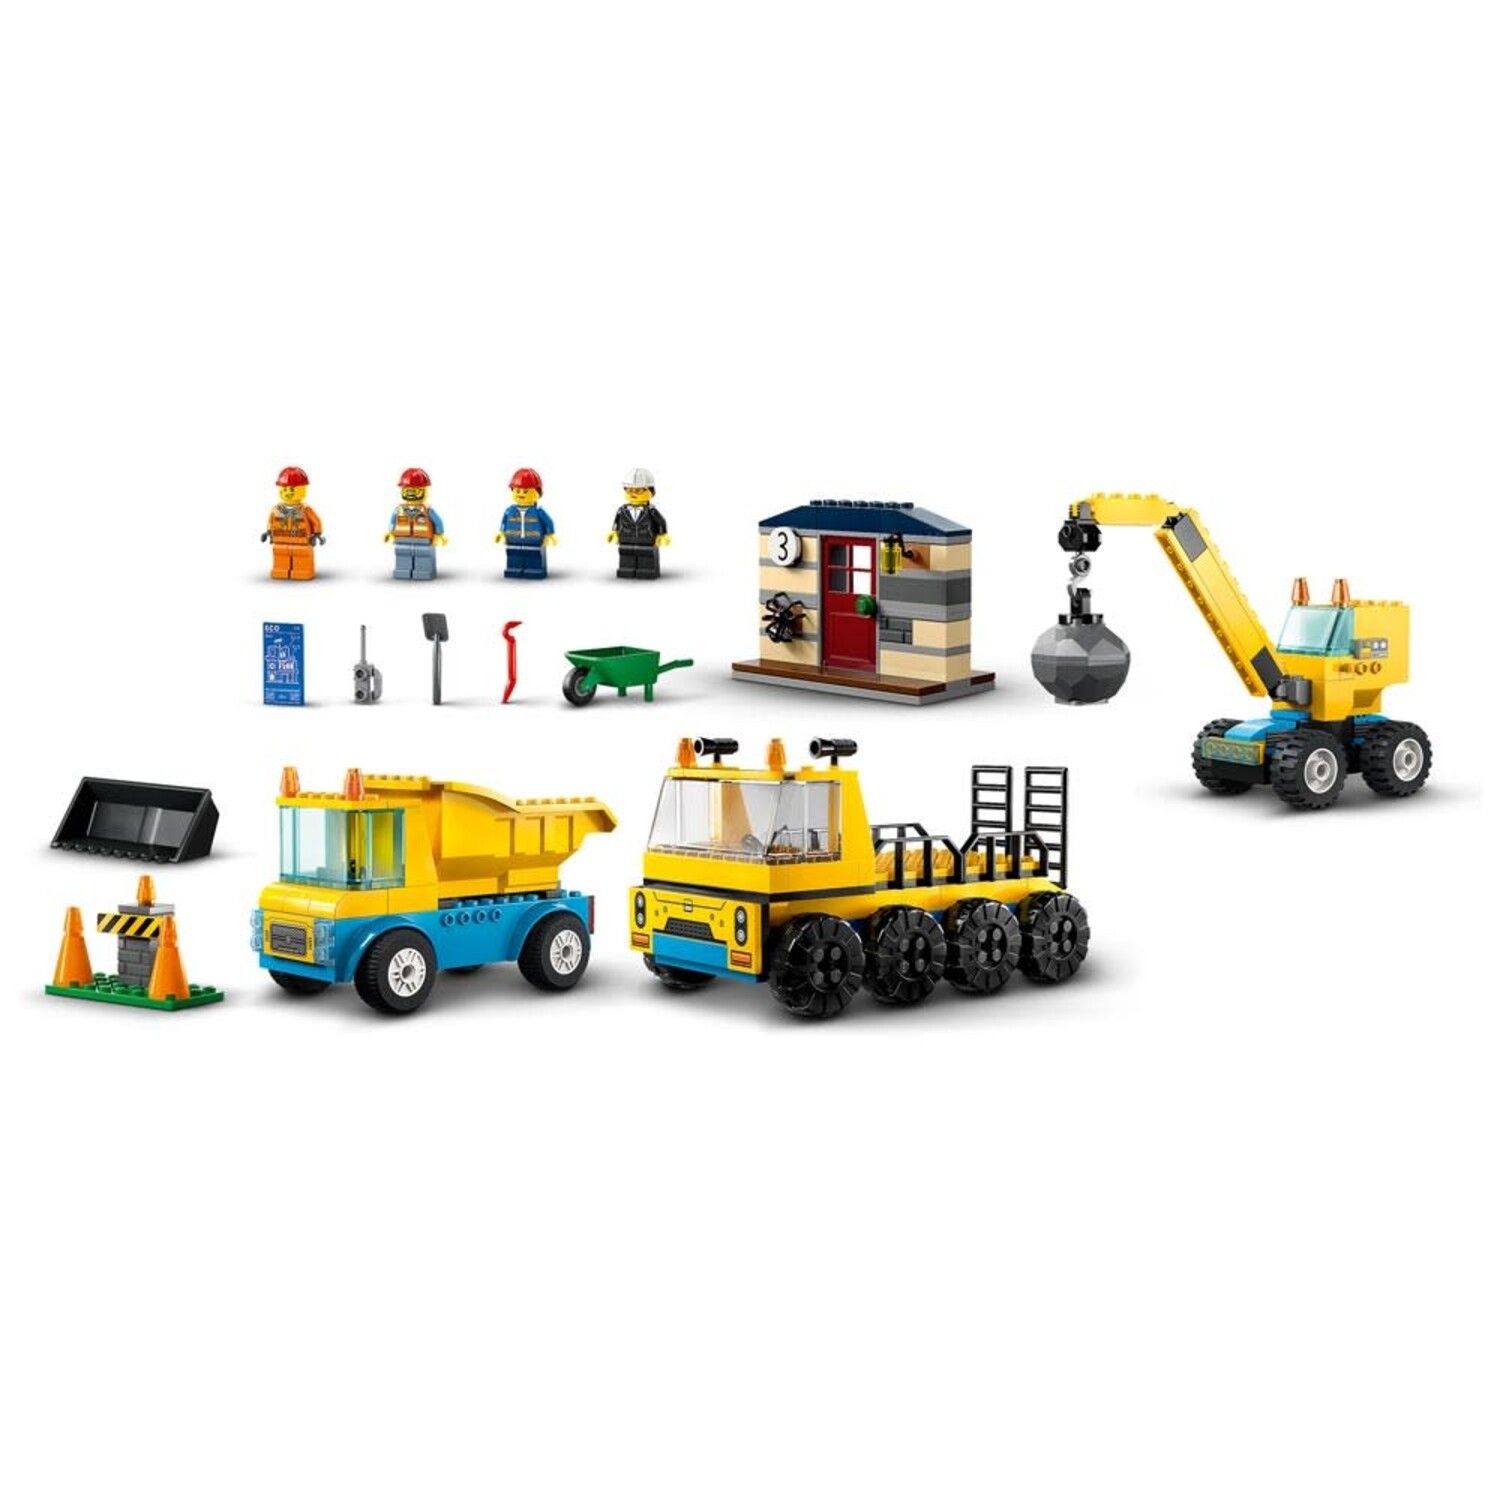 Construction Trucks and Wrecking Ball Crane LEGO City - Mudpuddles